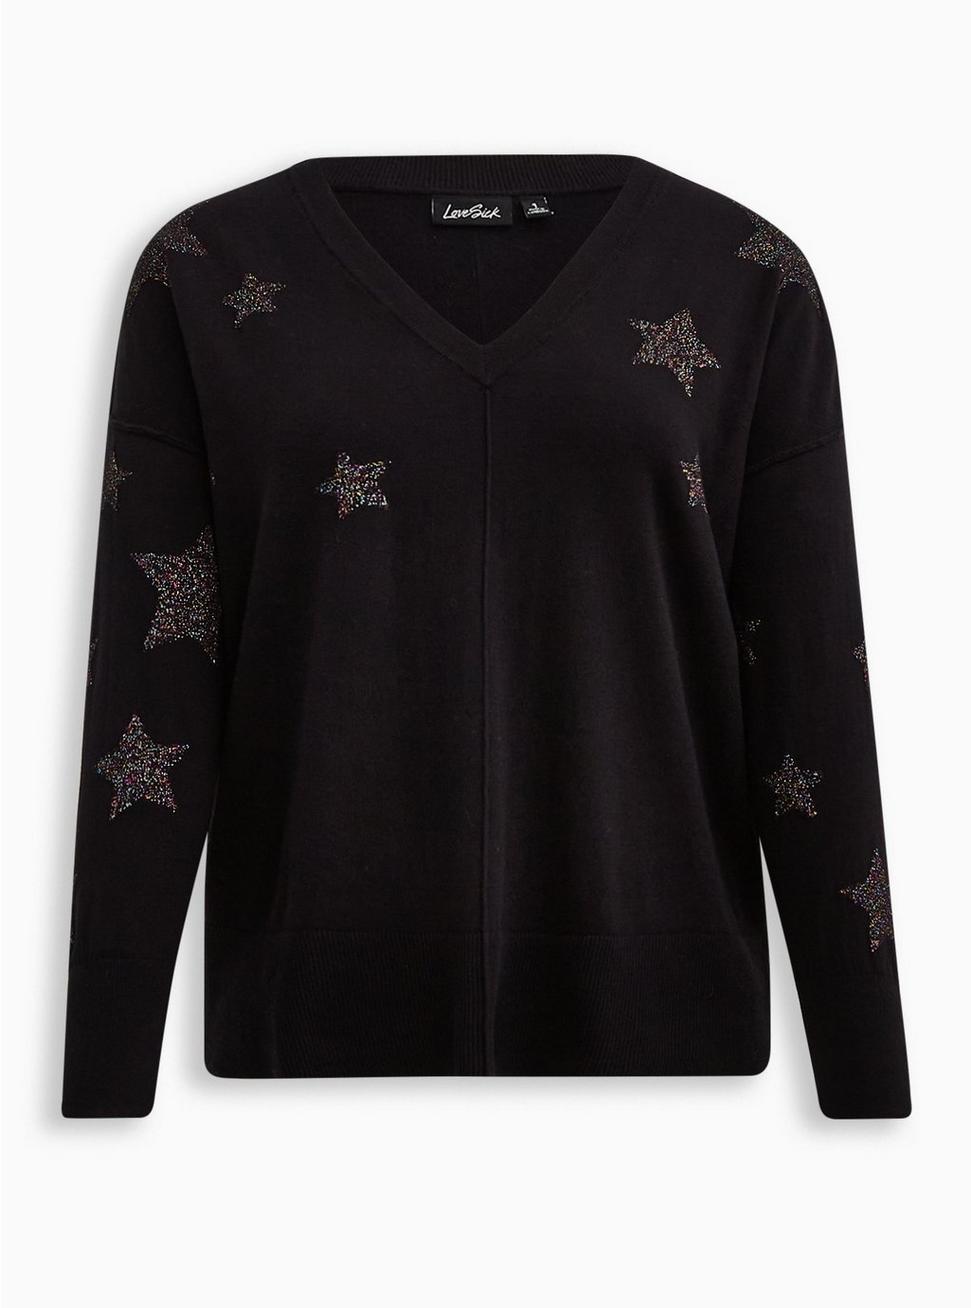 Plus Size LoveSick V-Neck Pullover Sweater, BLACK, hi-res